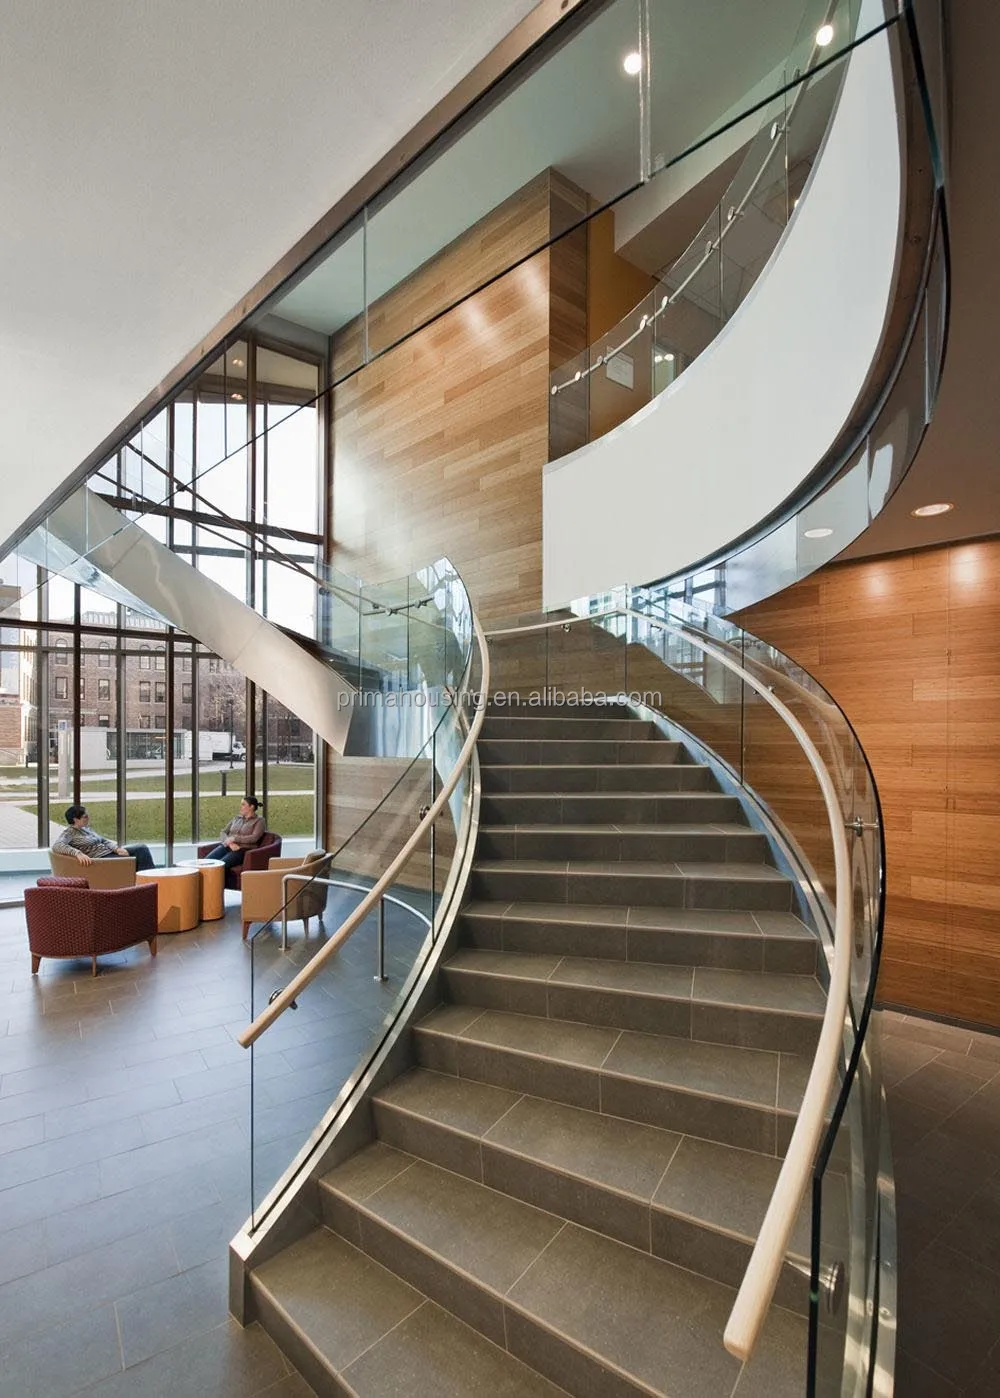 Interior Stairs Railing Designs For Villa - Buy Interior ...